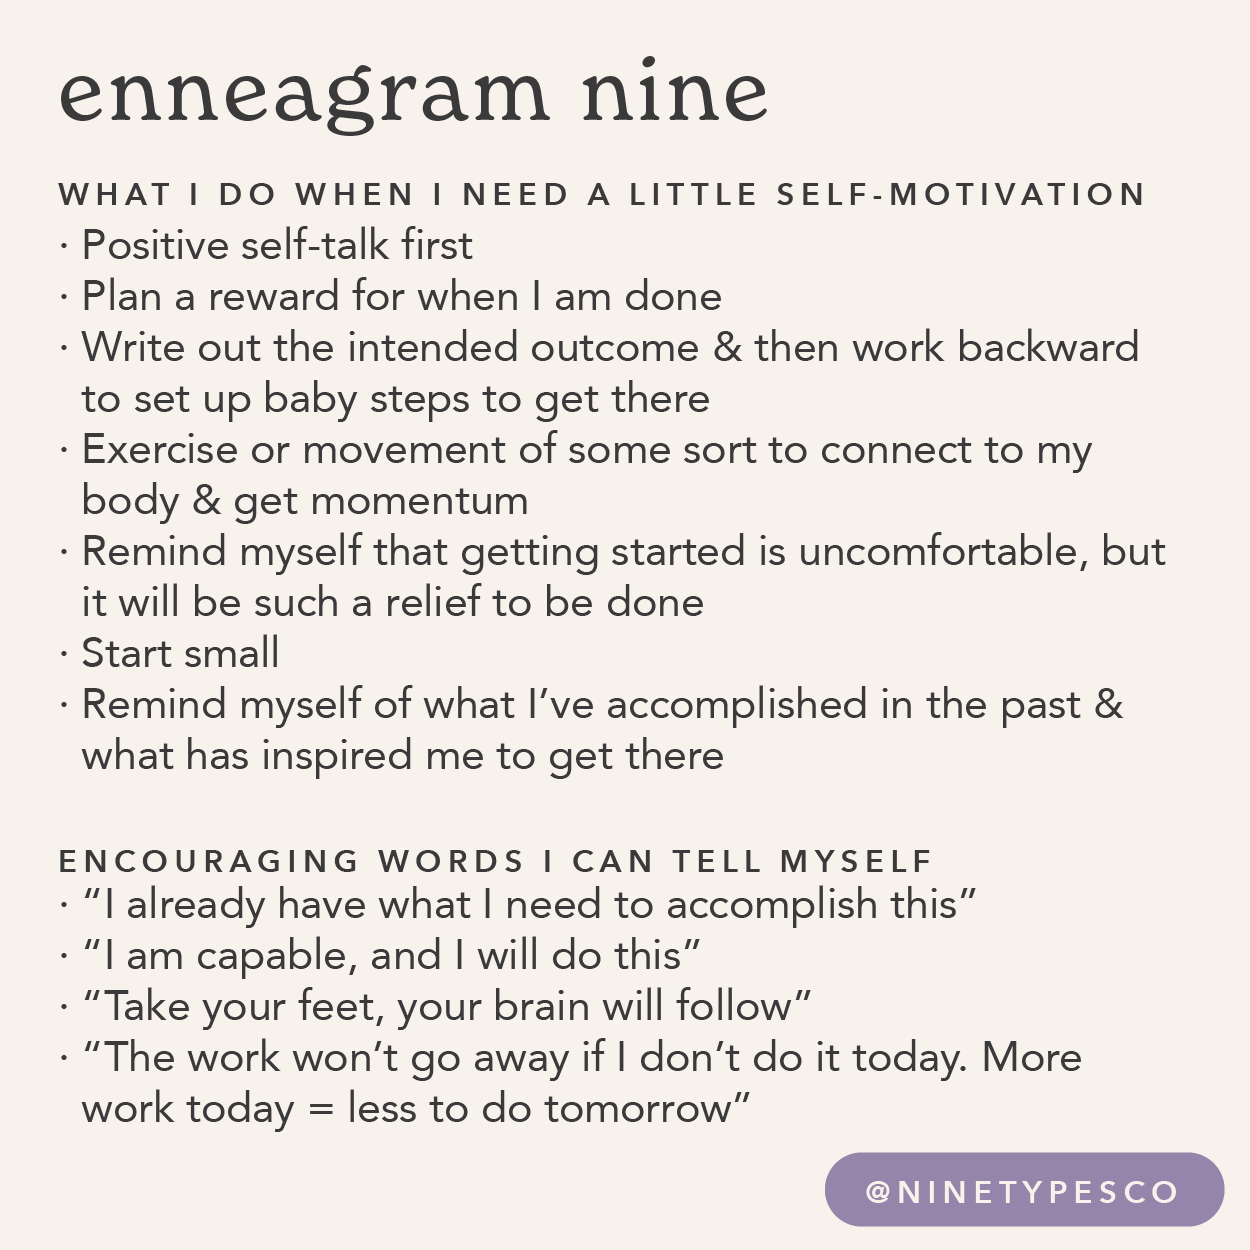 Feeling Motivated by Enneagram Type - Enneagram 9